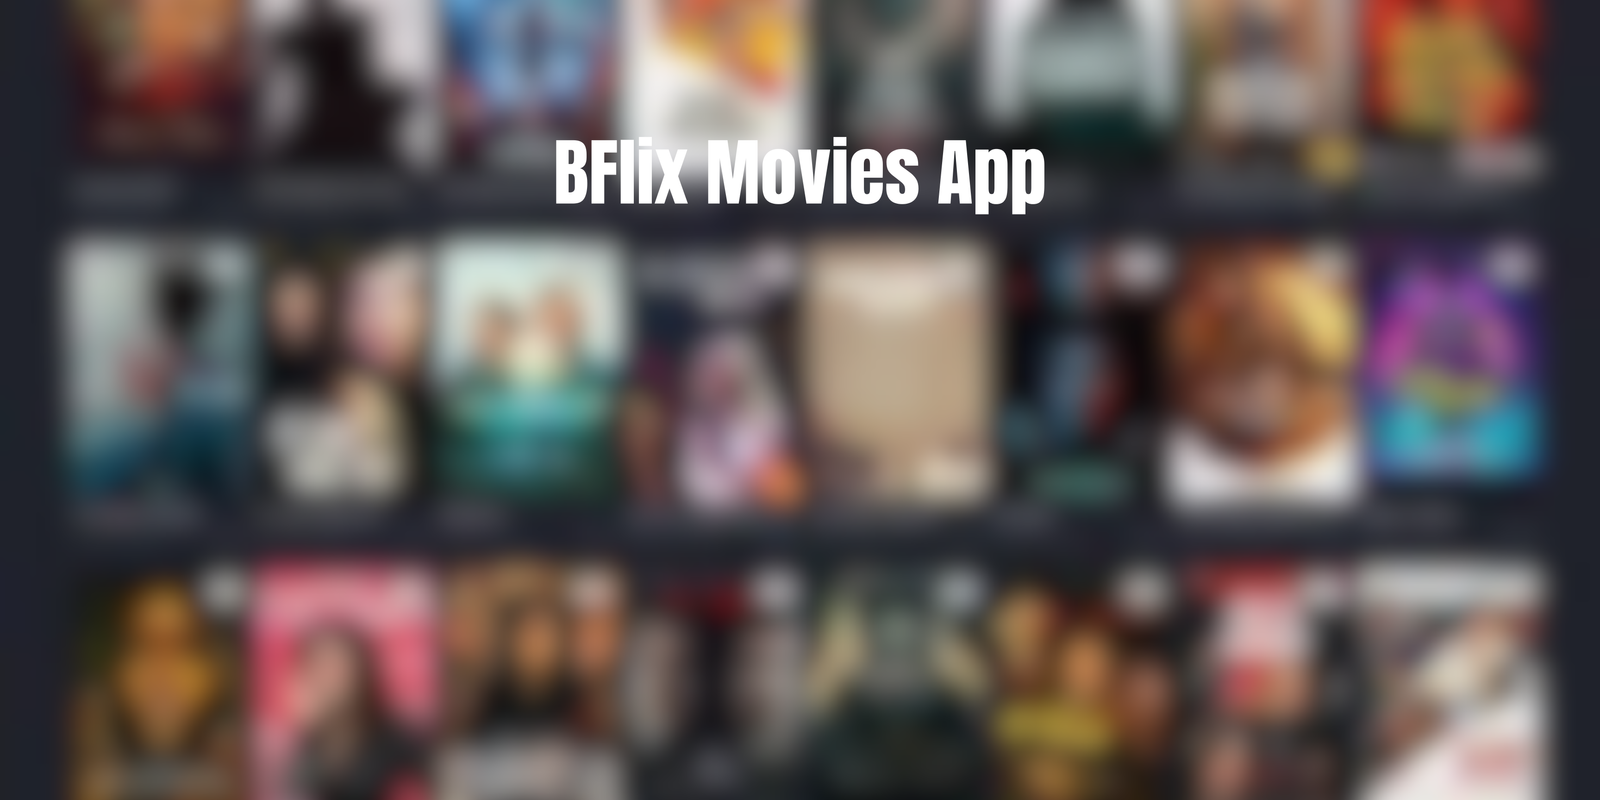 BFlix Movies App